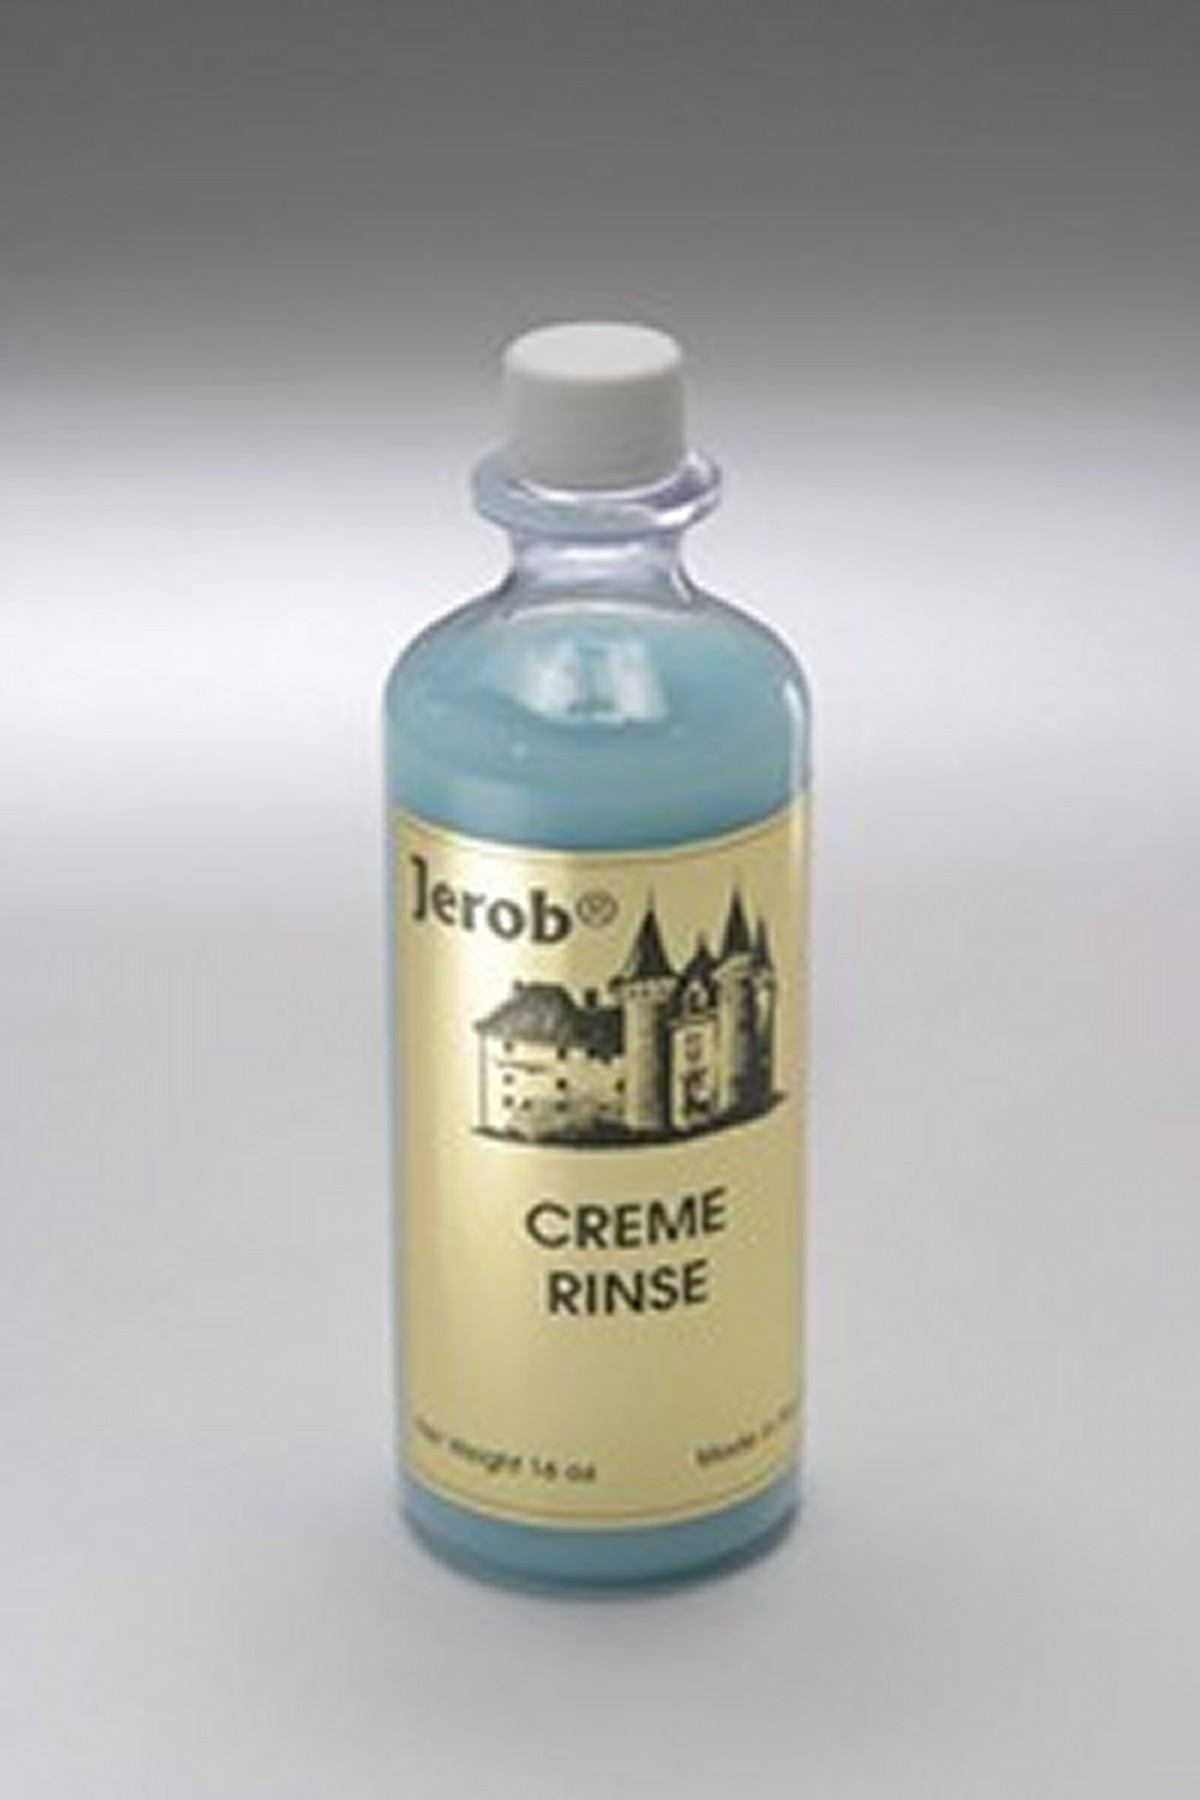 Jerob Shampoo Creme Rinse 236 ml